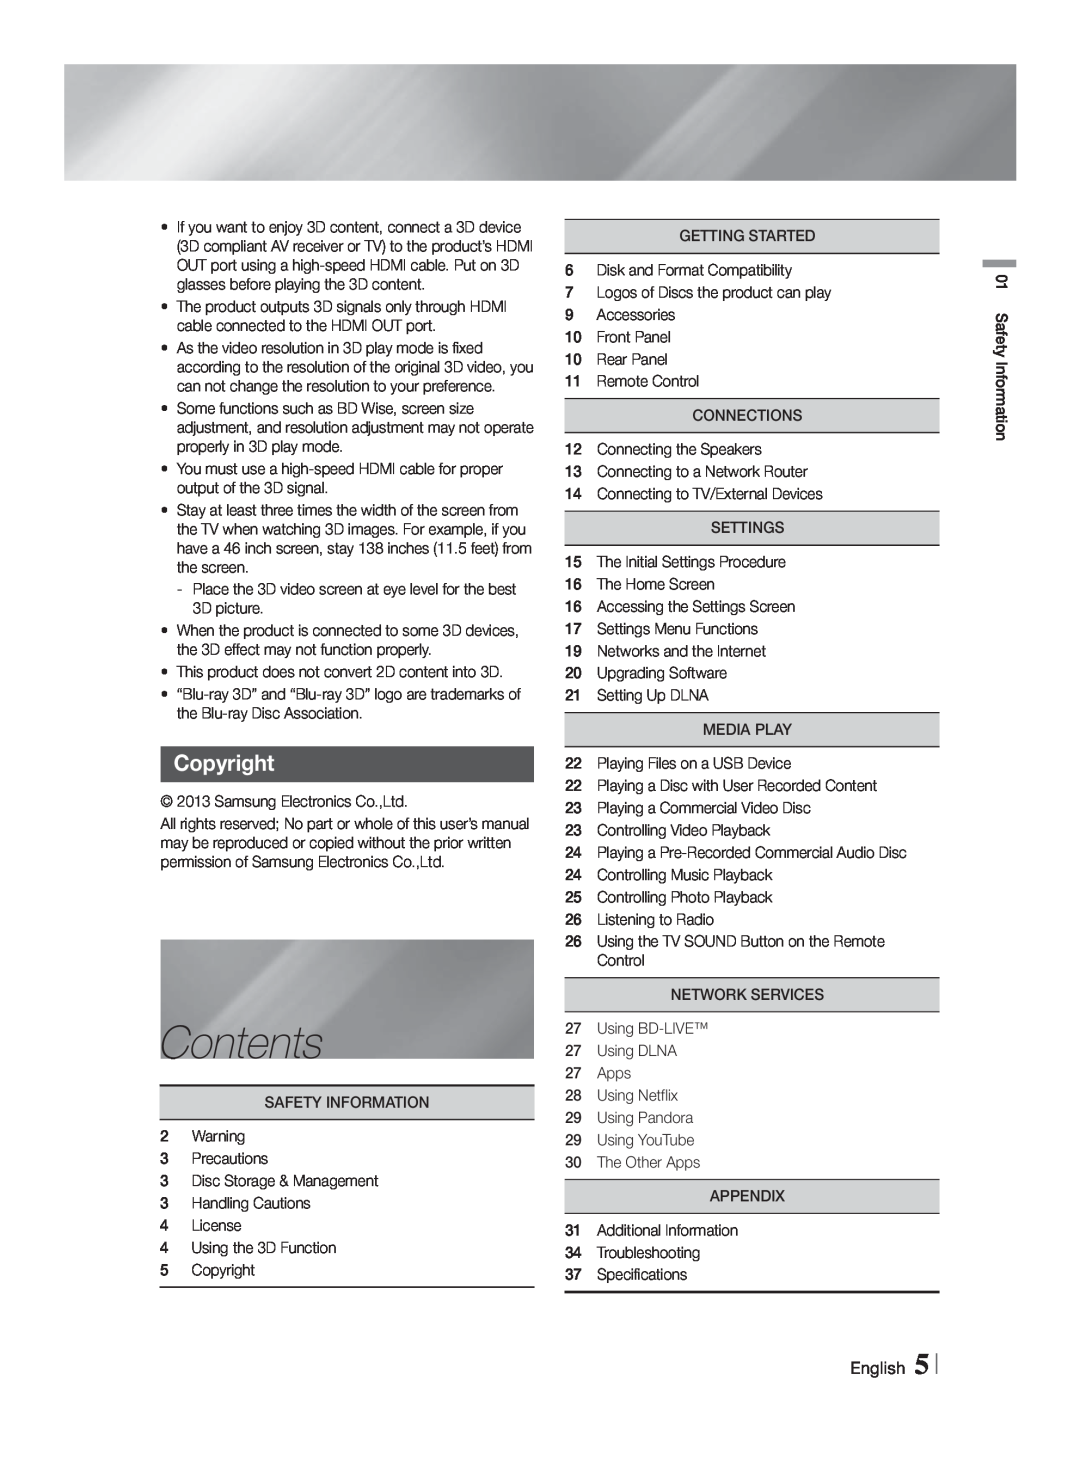 Samsung HTF4500ZA user manual Contents, Copyright, English 